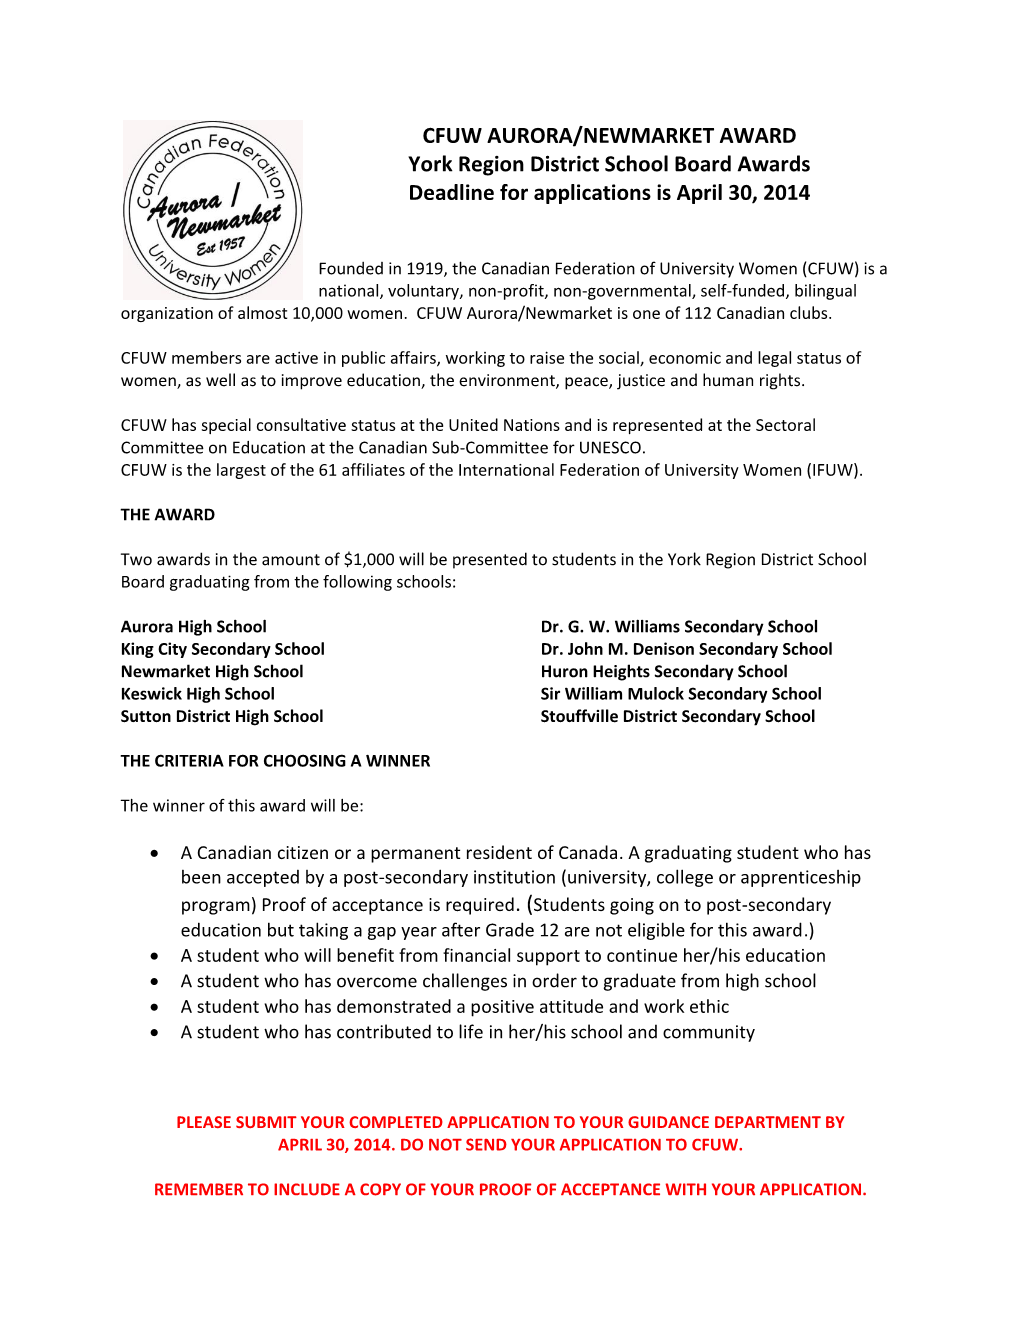 CFUW AURORA/NEWMARKET AWARD York Region District School Board Awards Deadline for Applications Is April 30, 2014